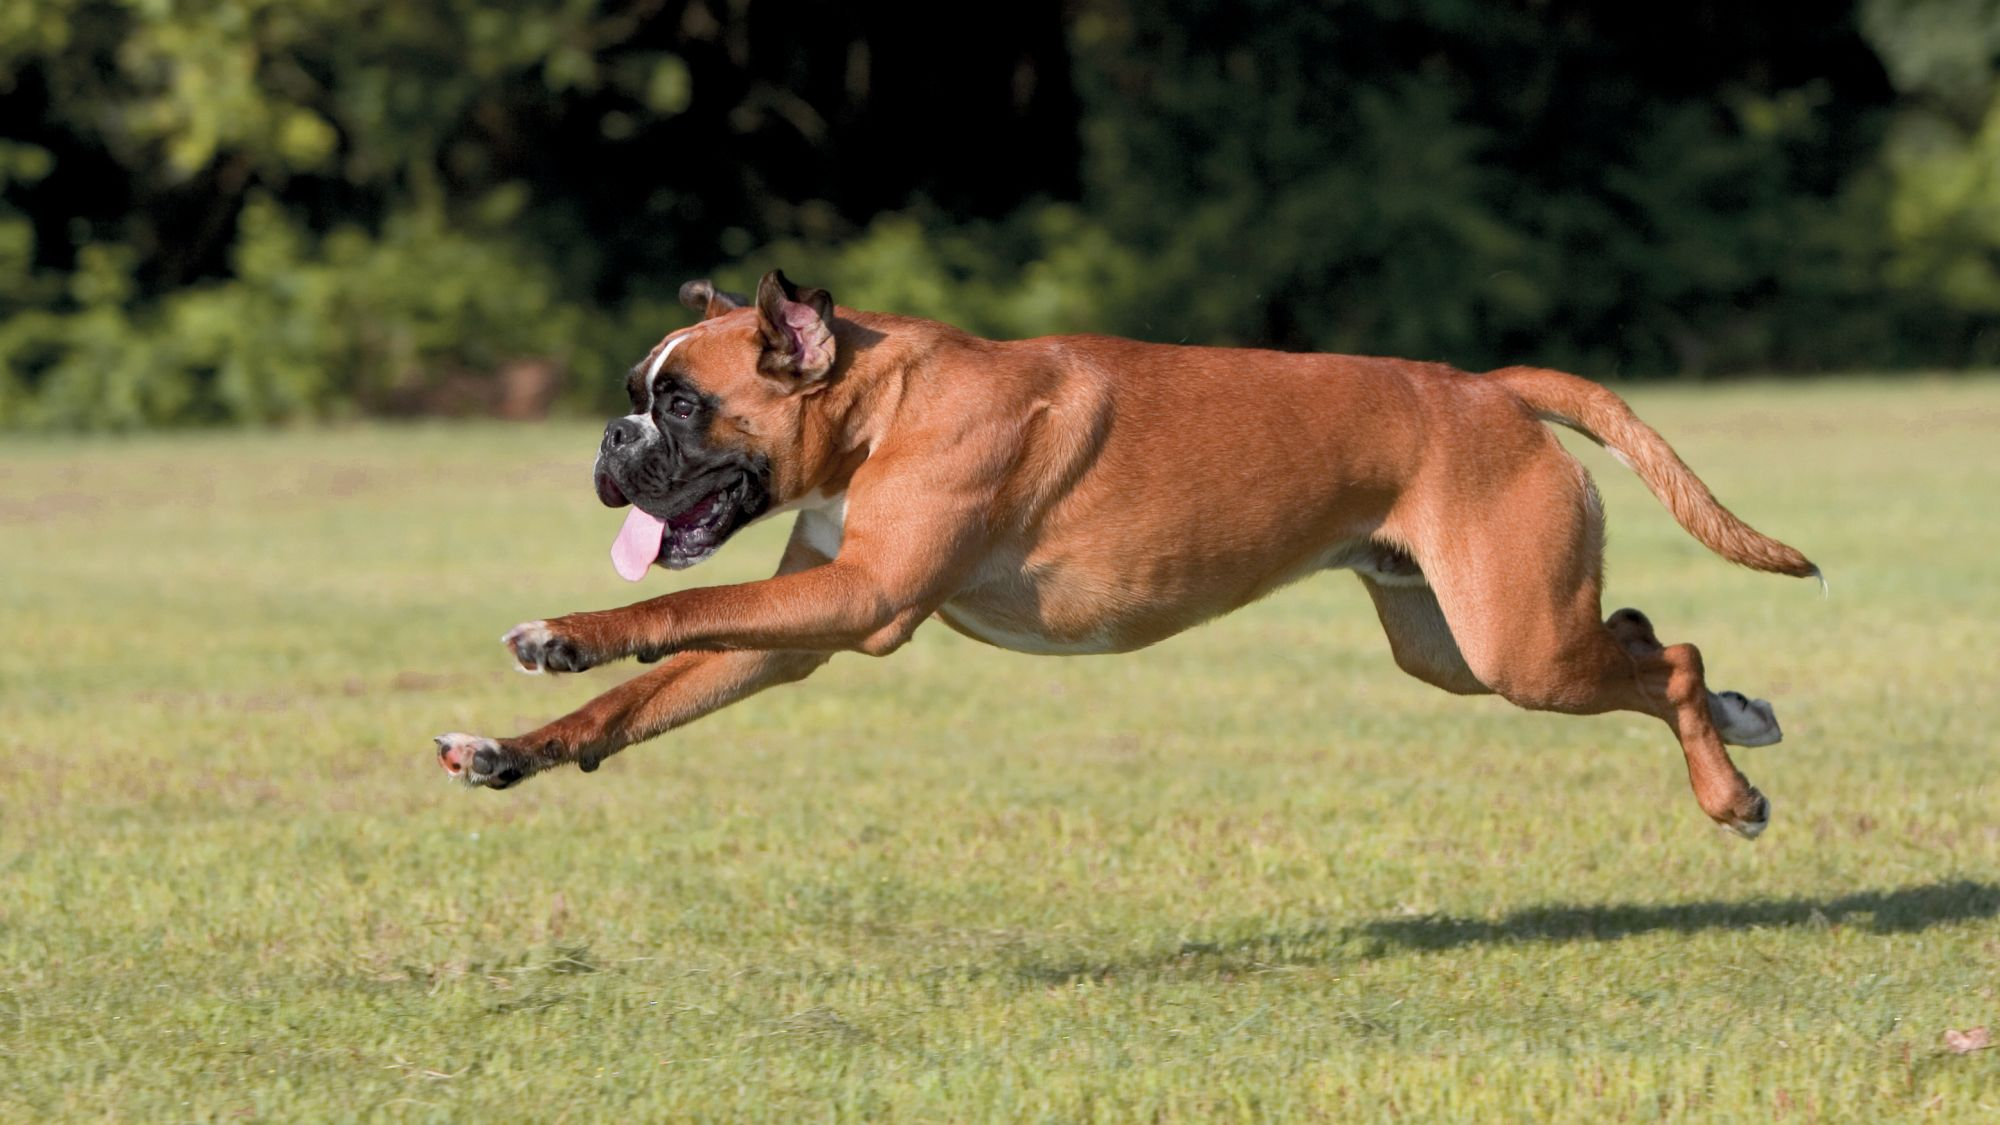 Boxer running over grass